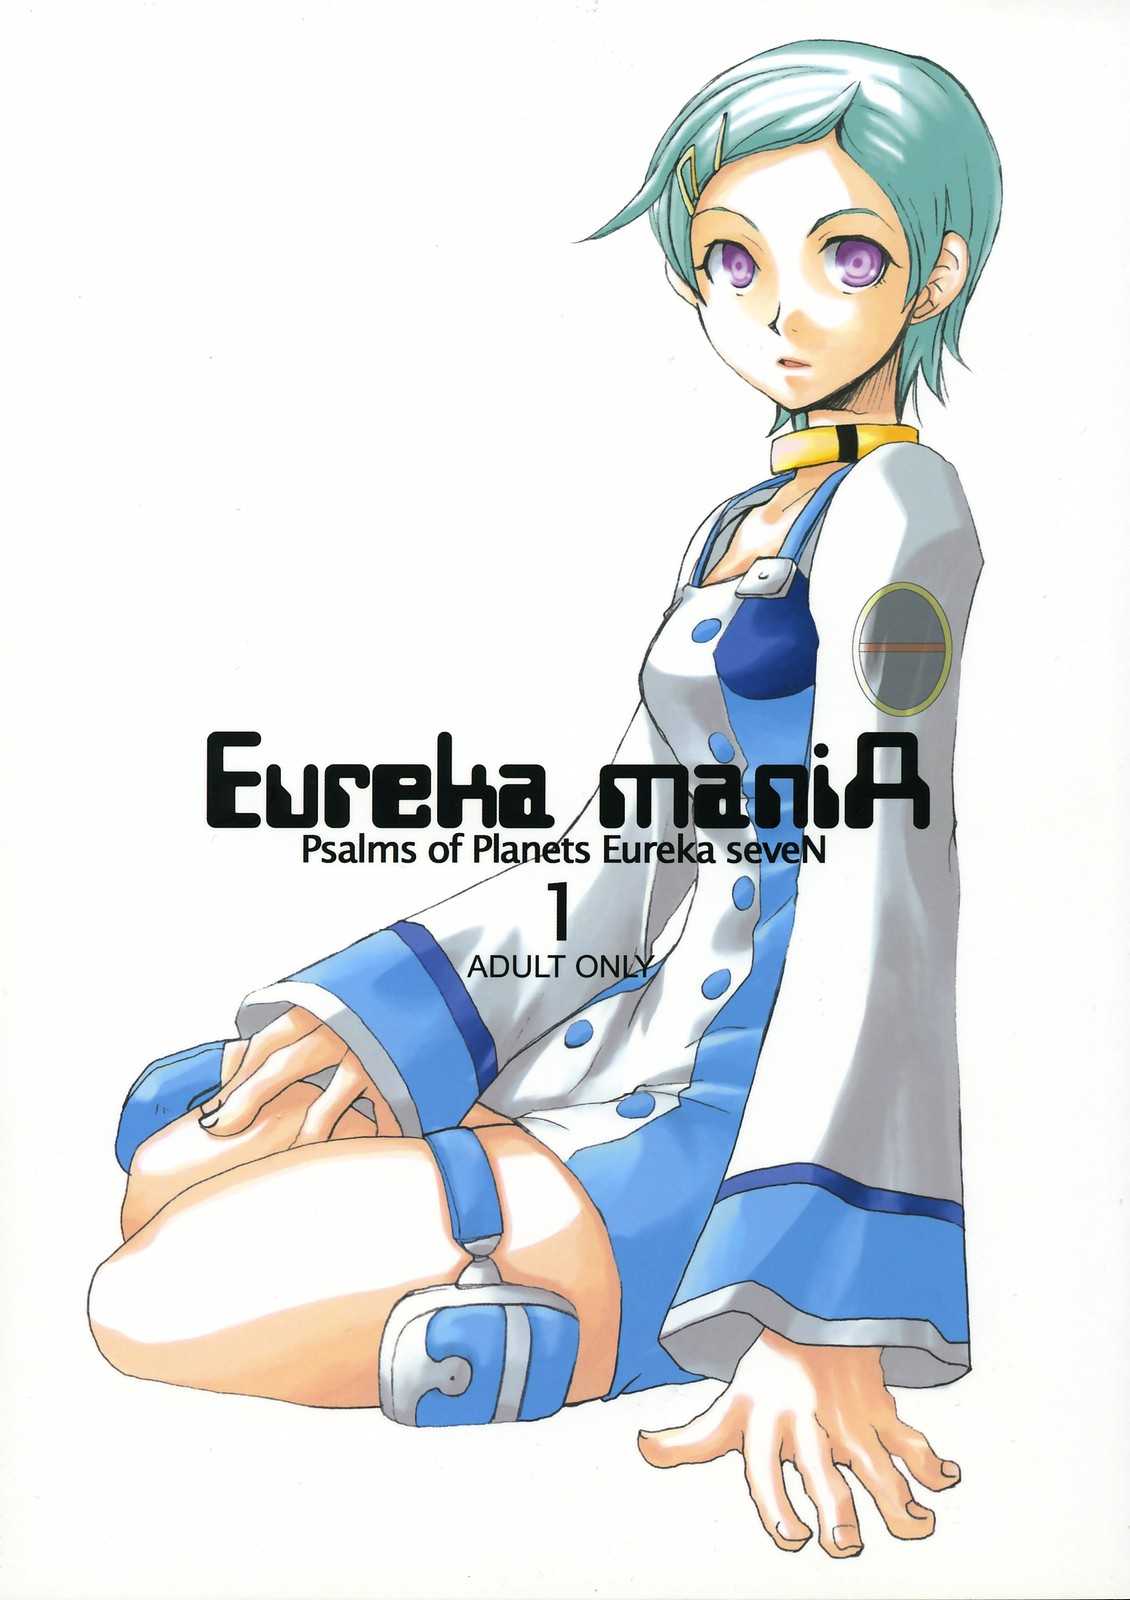 Eureka maniA 1 (Eureka Seven) 